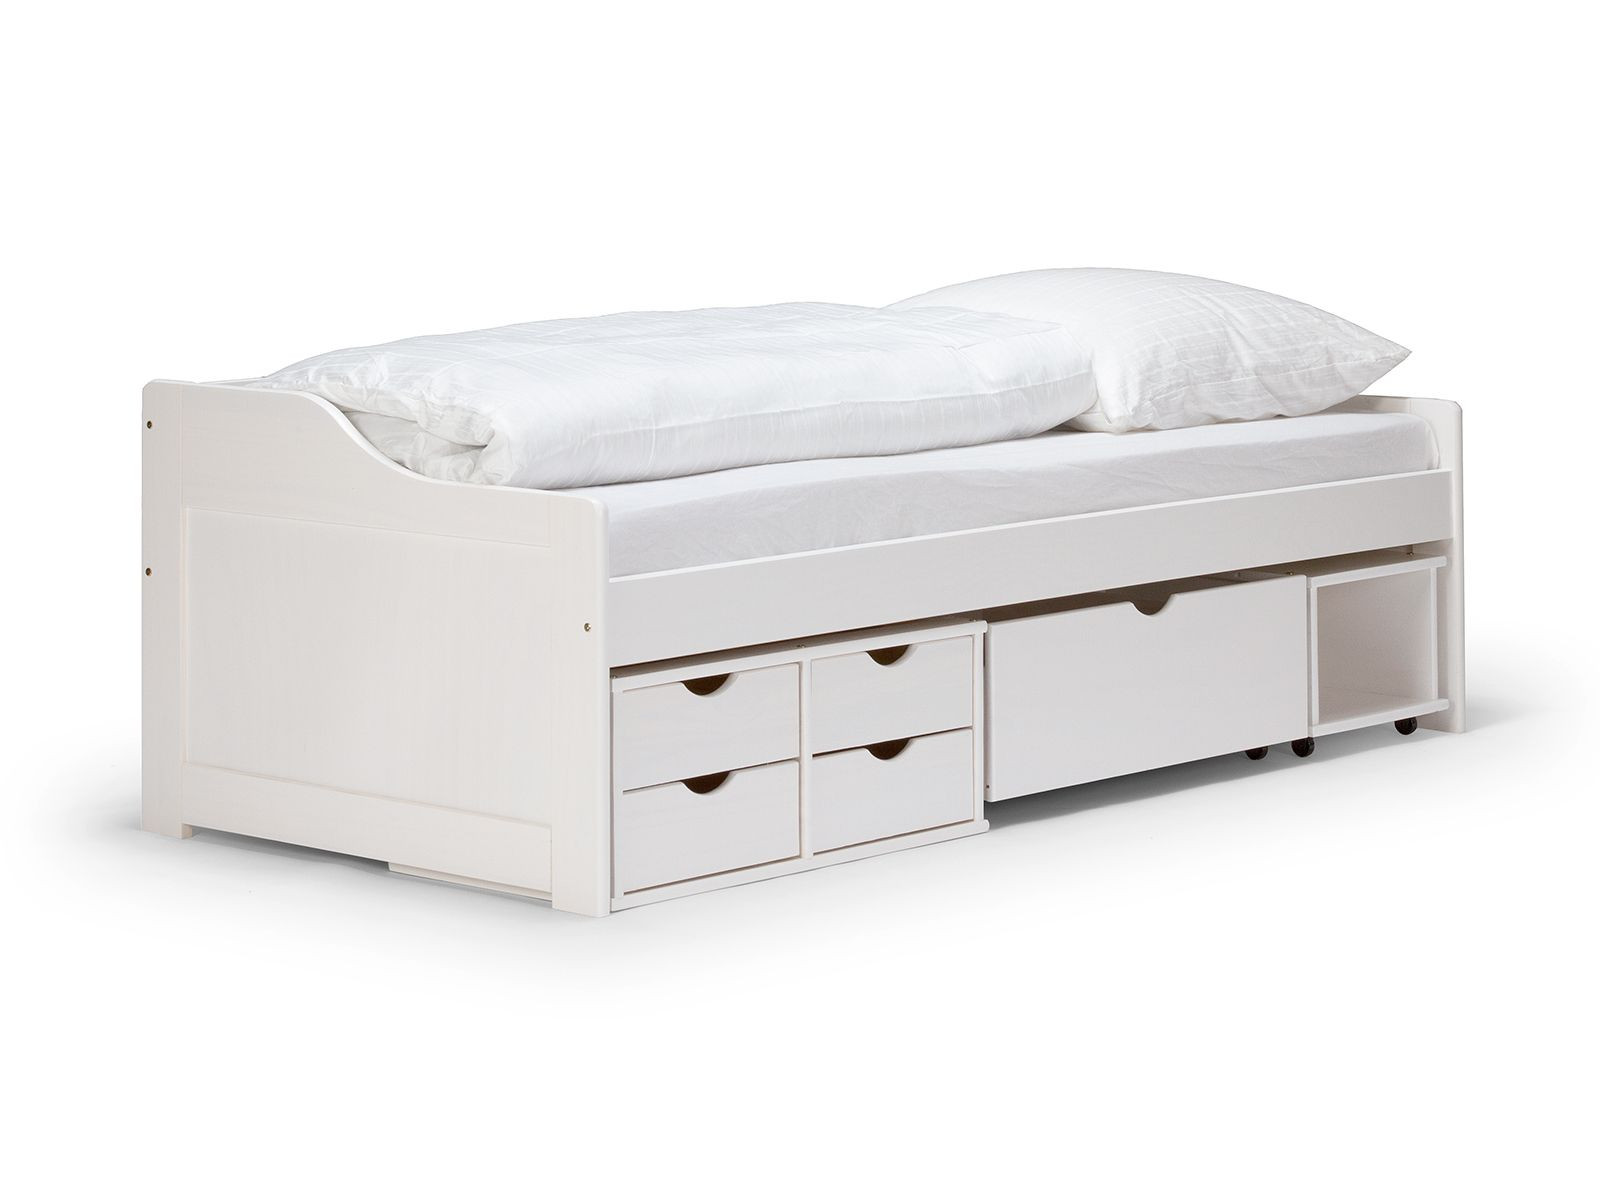 Bett Weiß 90x200
 Bett 90x200 weiß Kinderbett Holzbett massiv lackiert 5